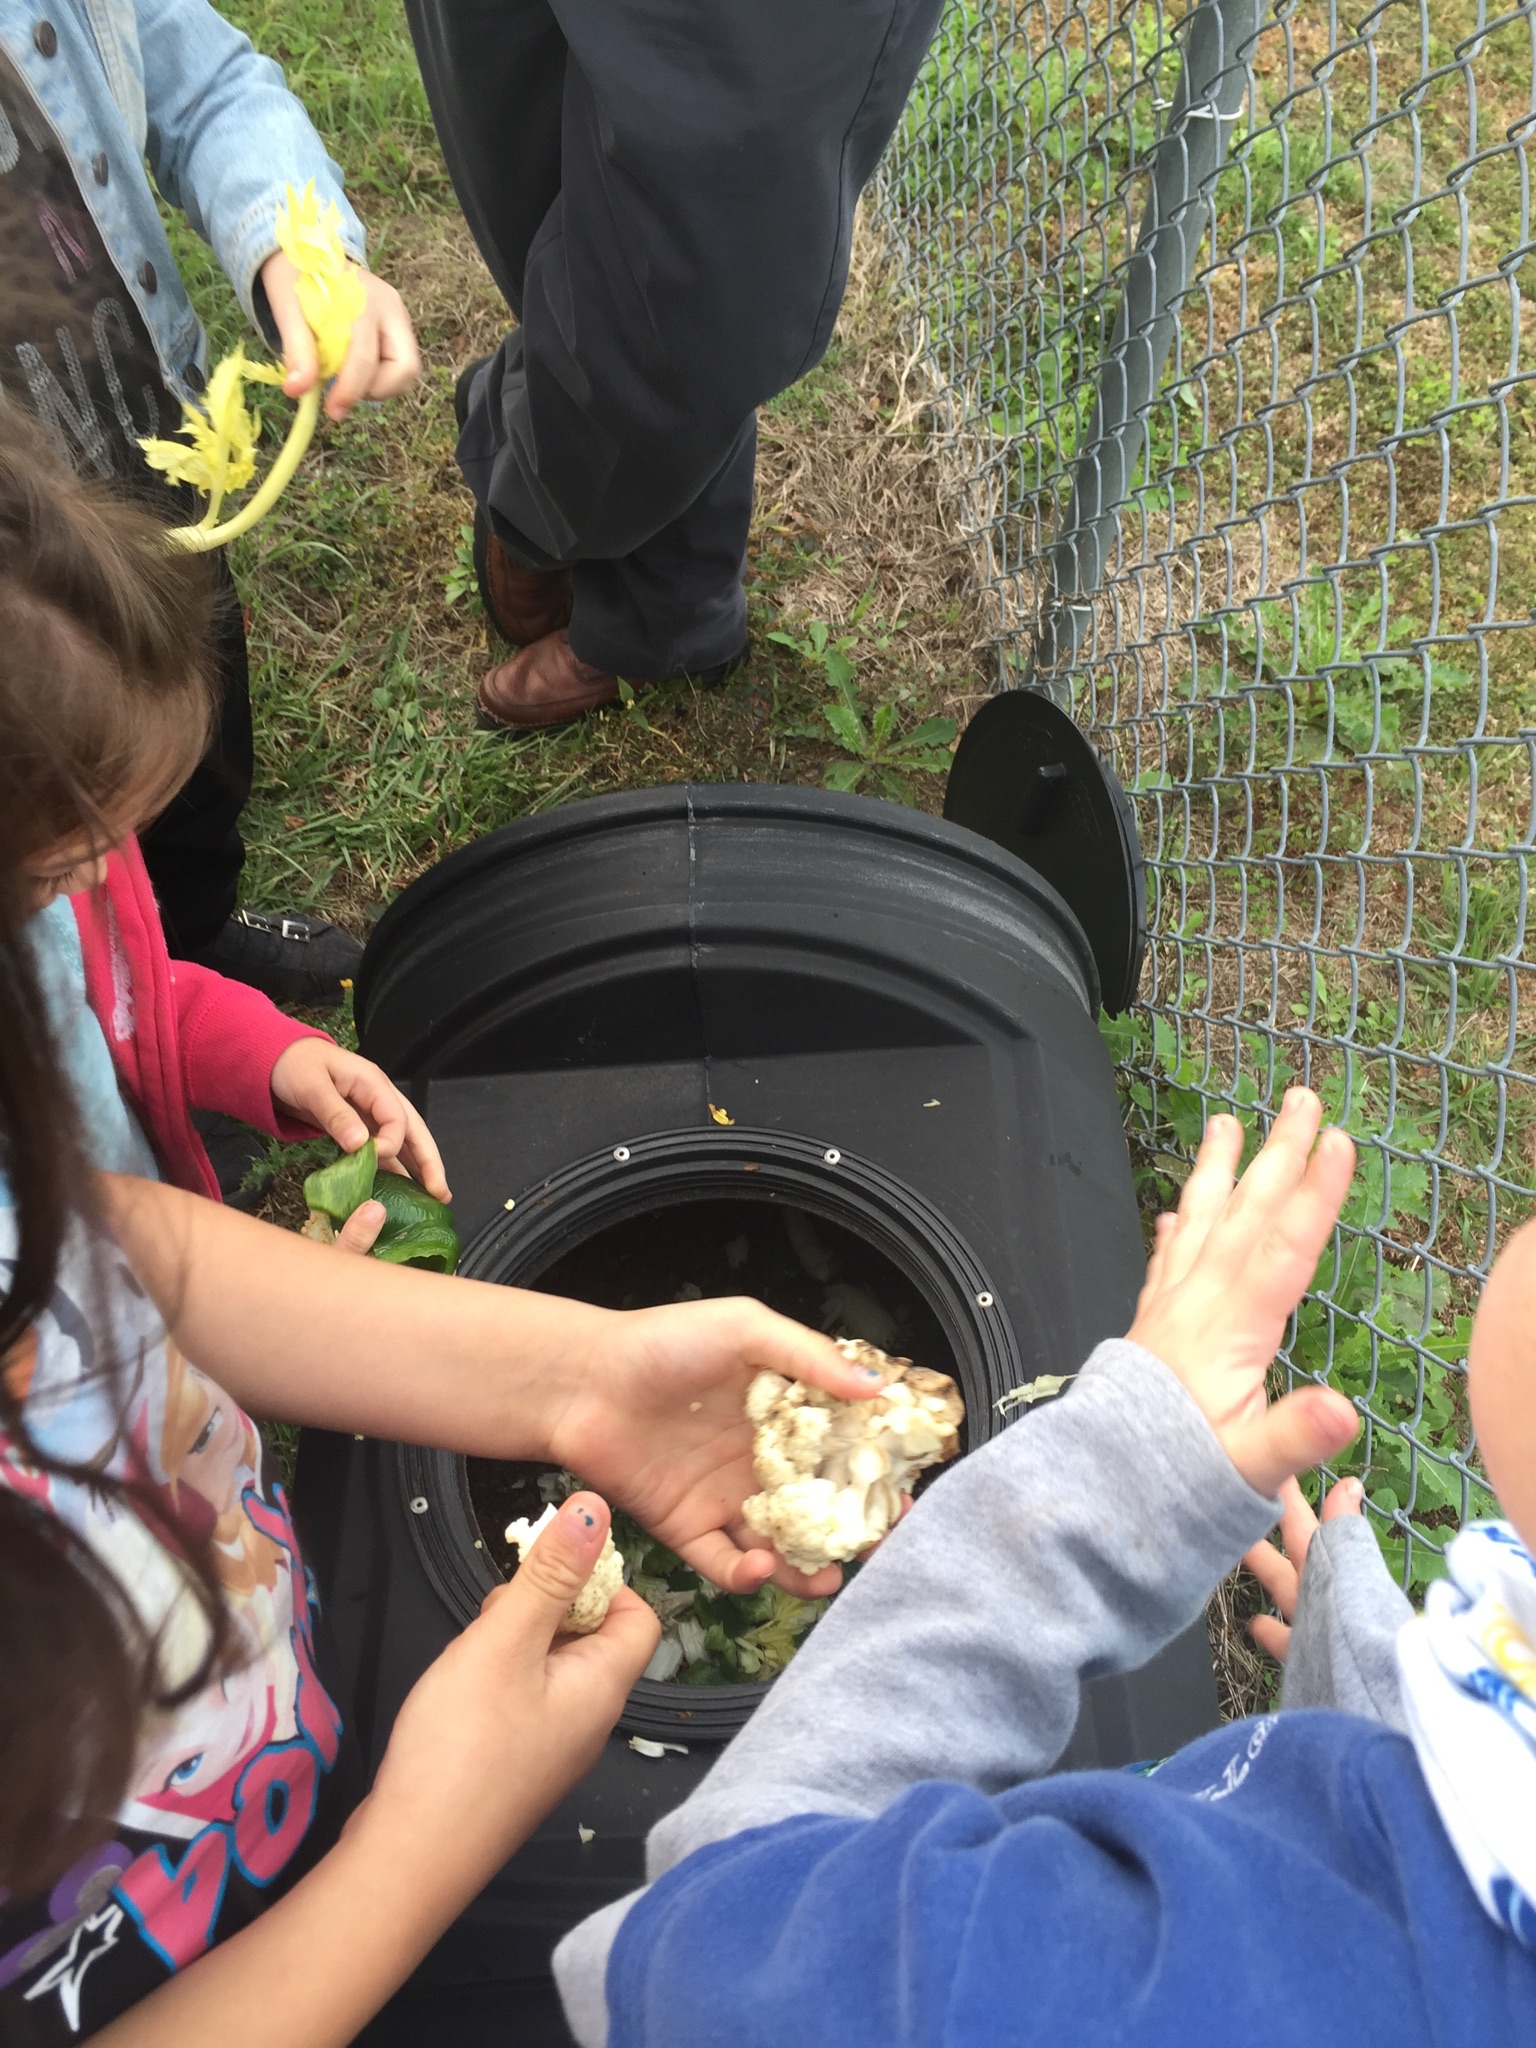 students putting food scraps in compost bin